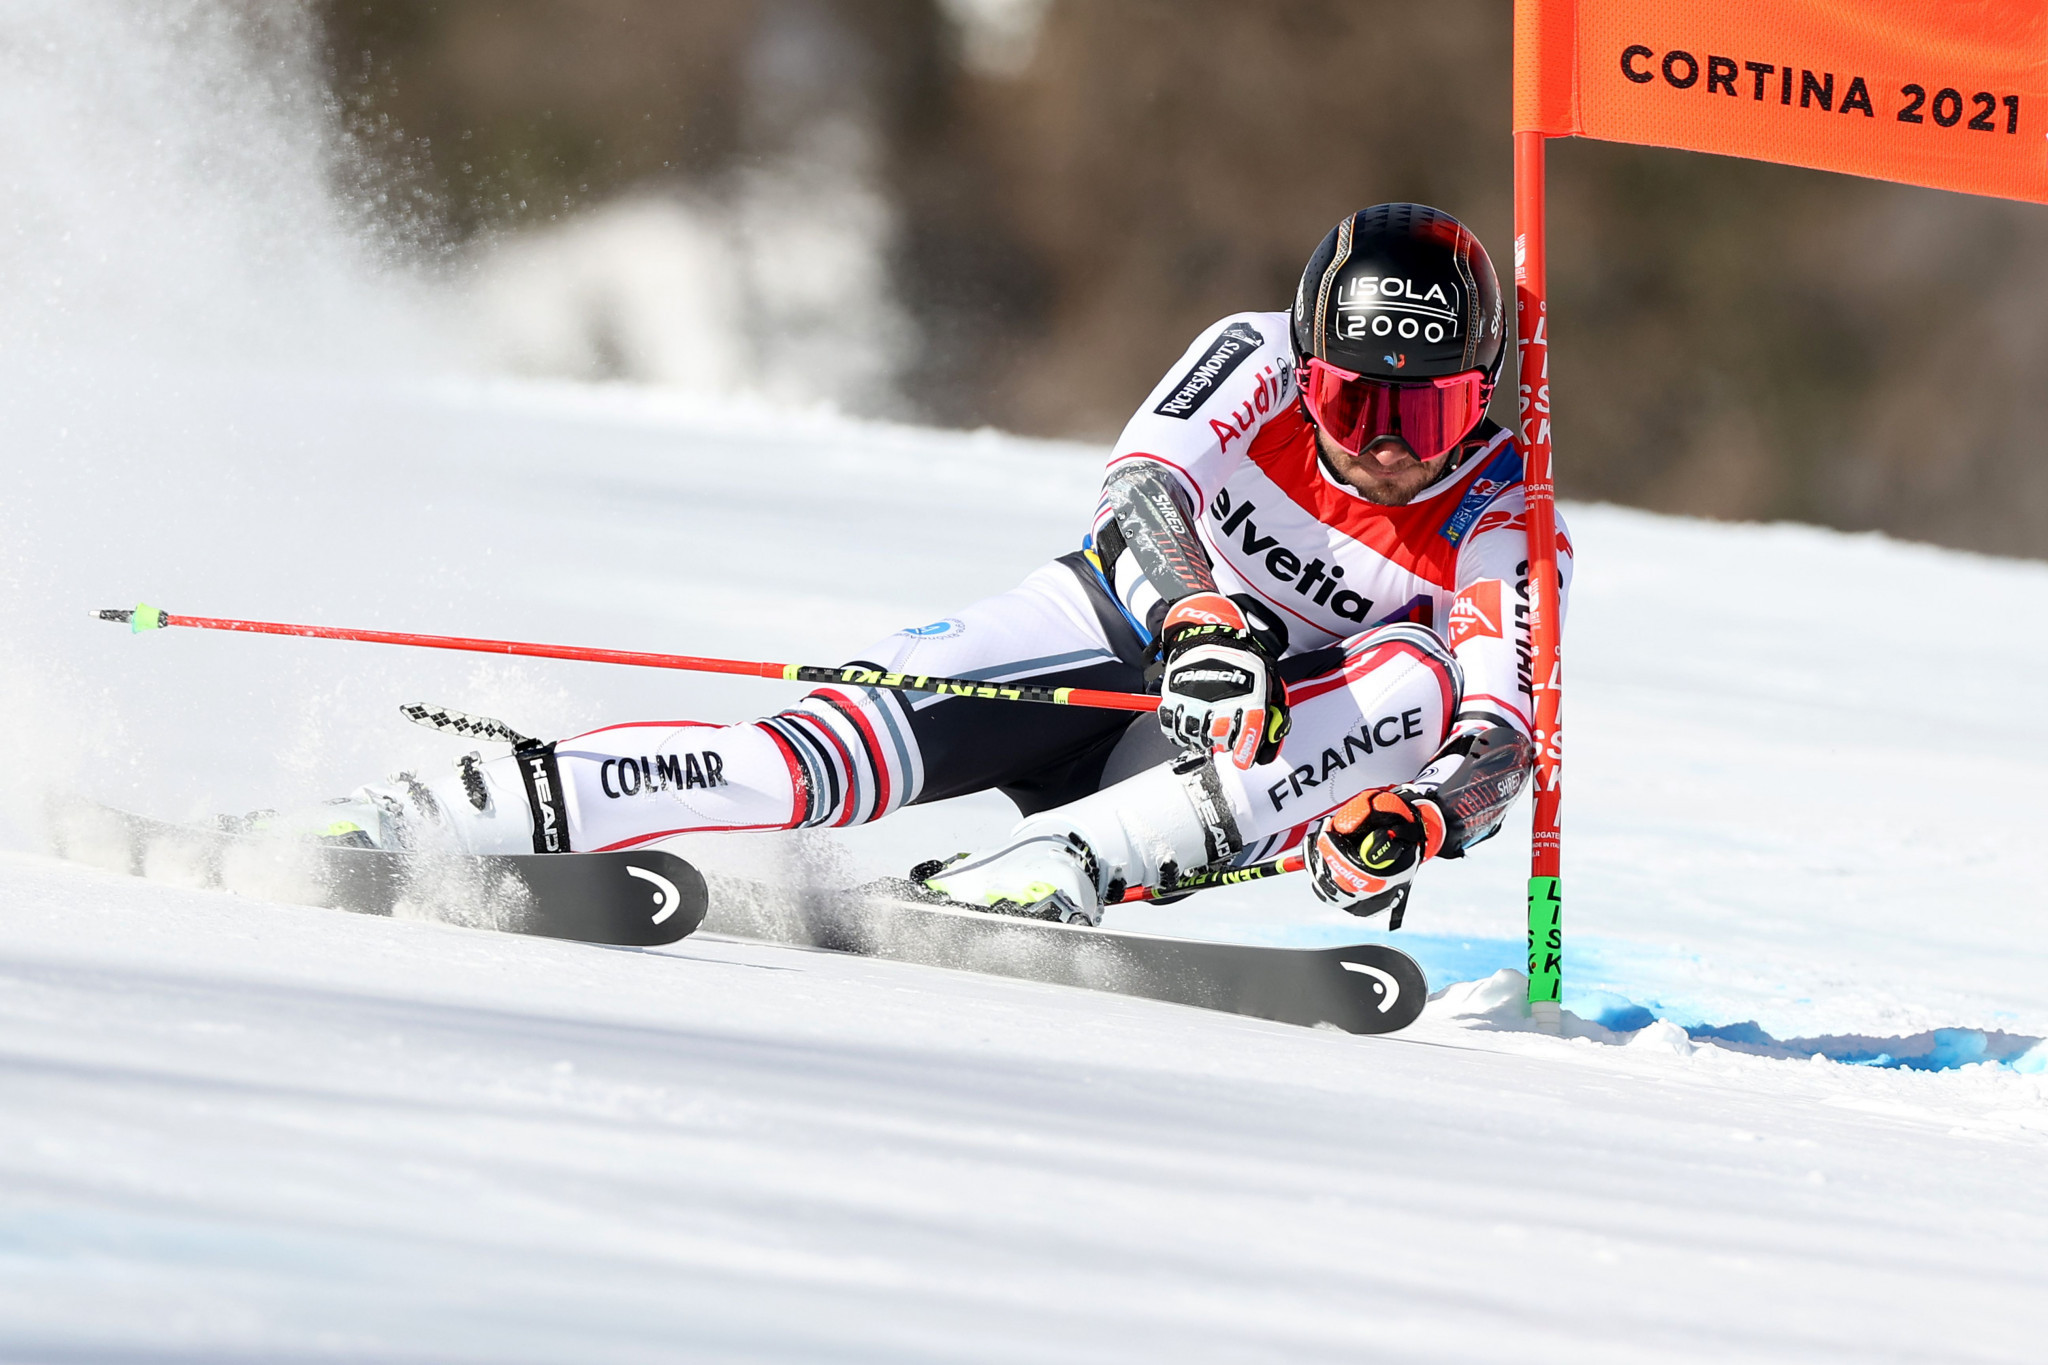 Giant slalom world champion Faivre to contest FIS Alpine Ski World Cup in Bansko